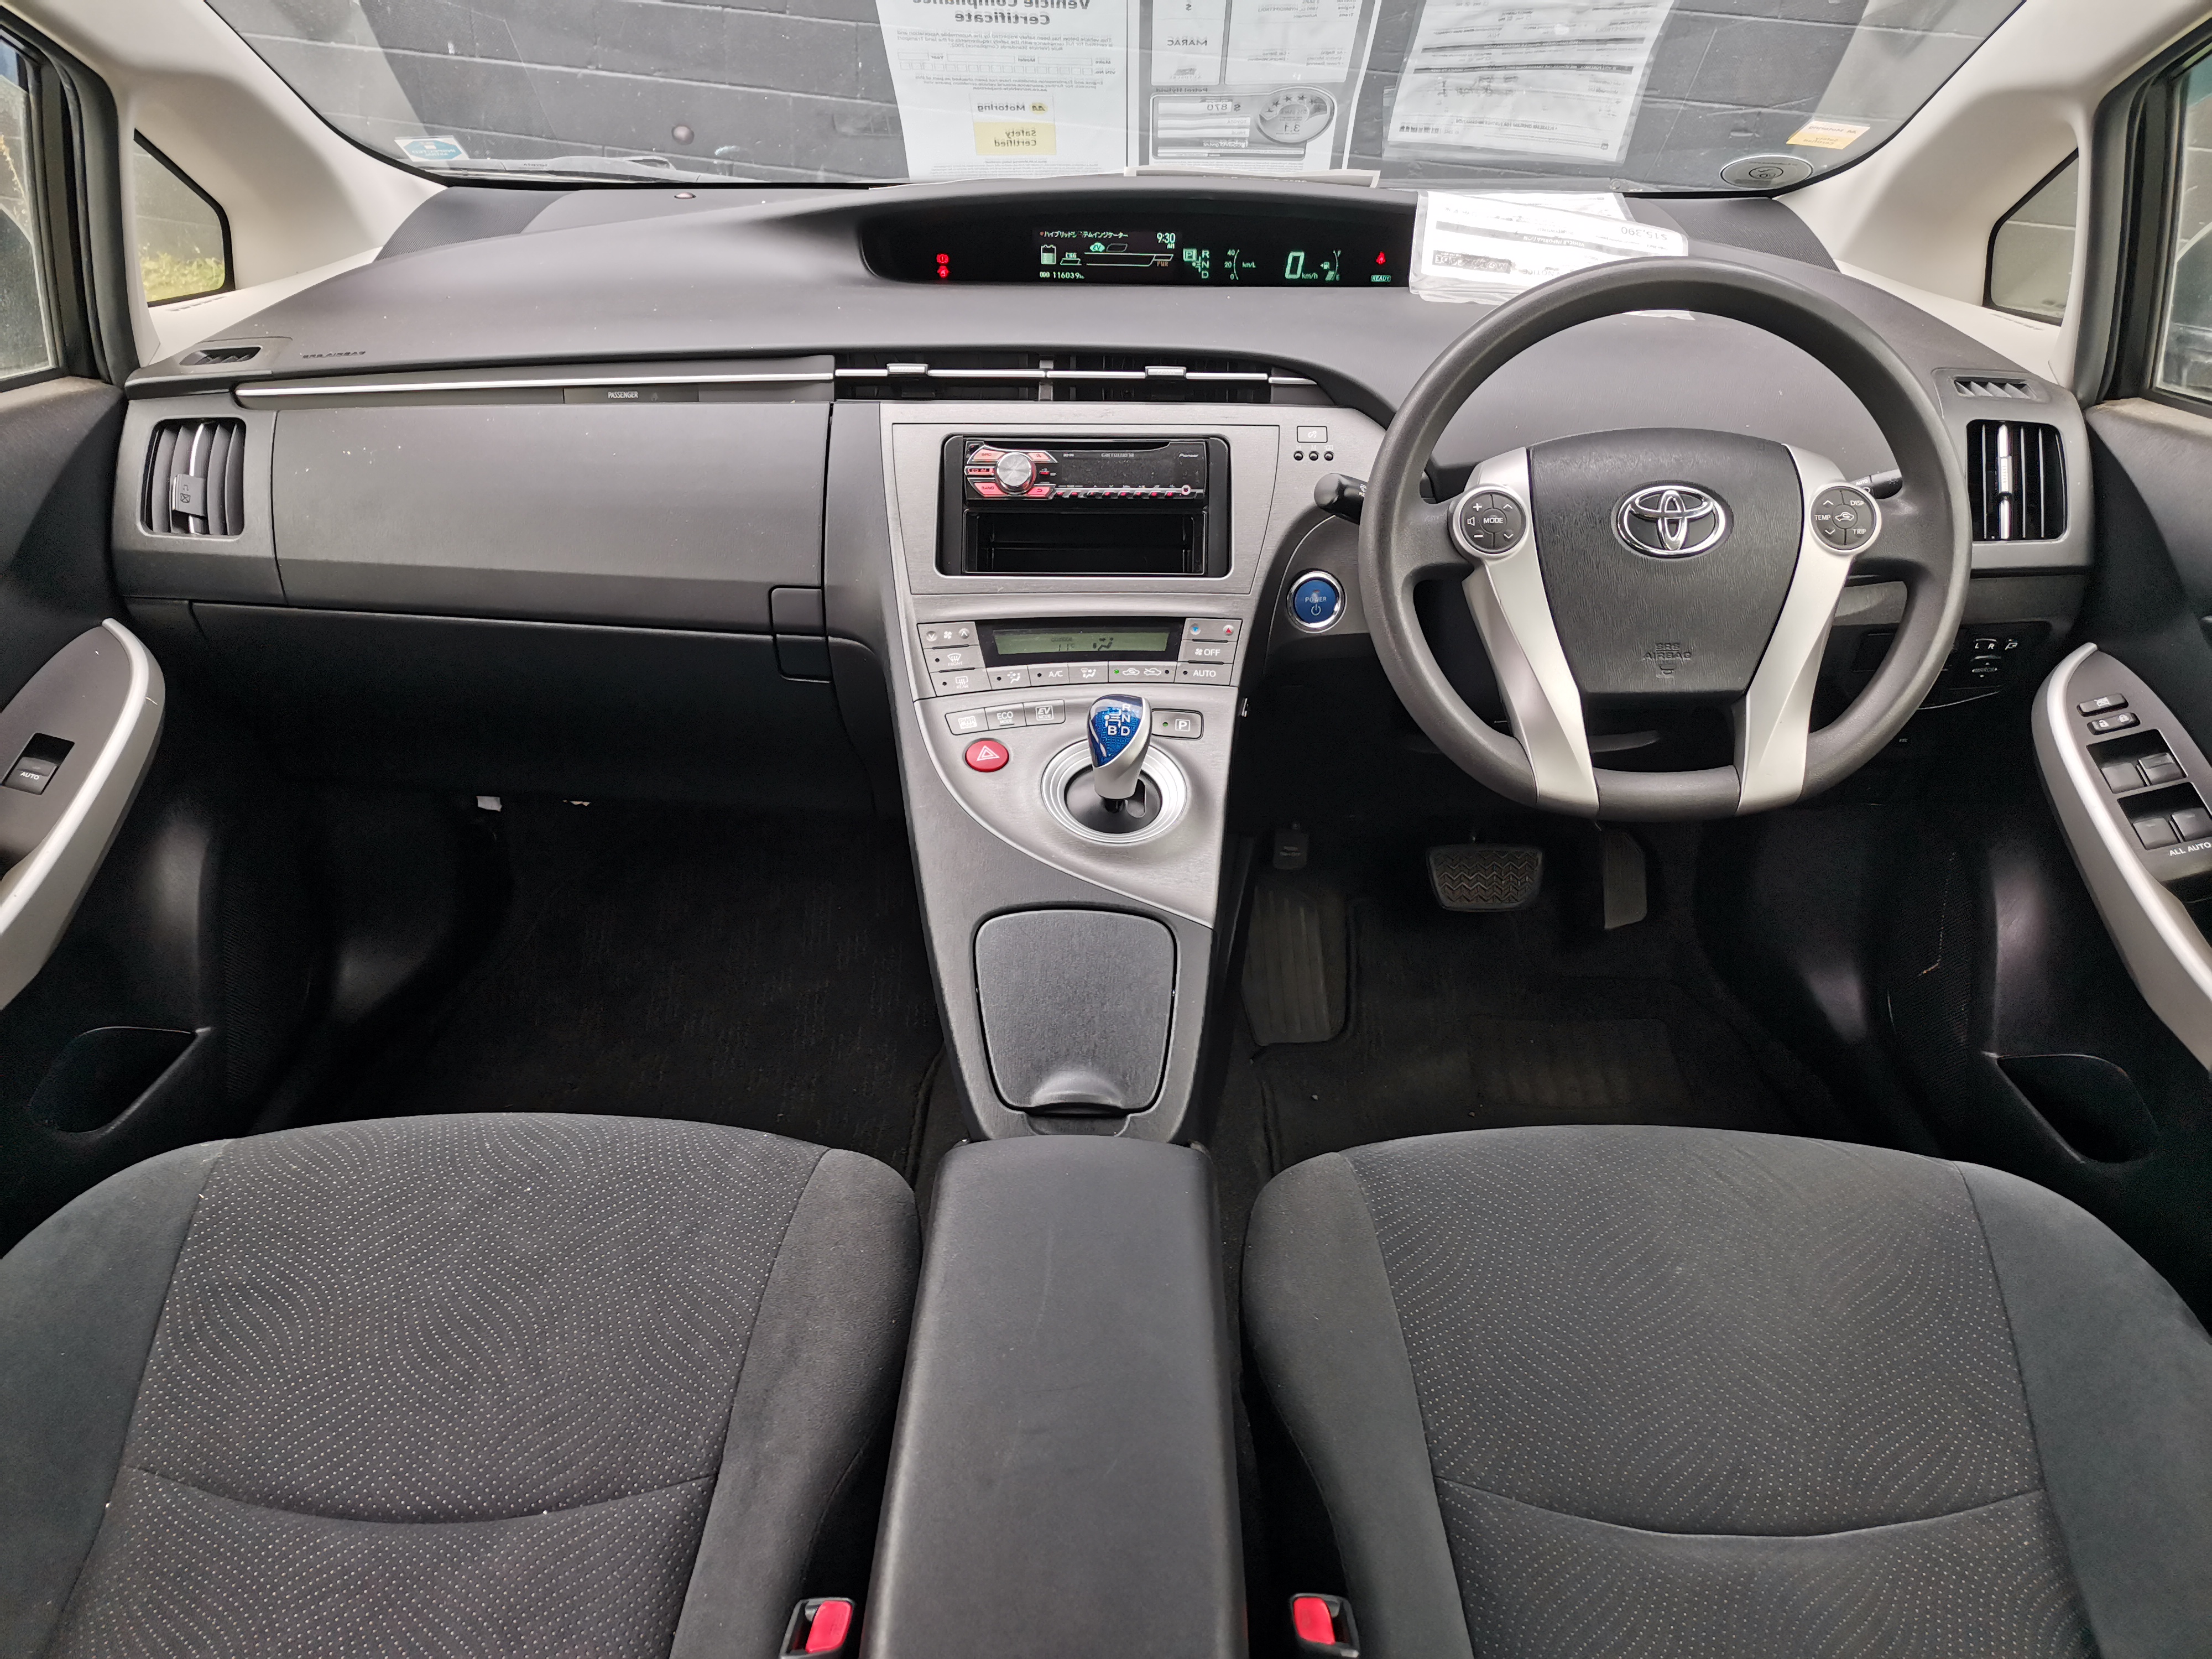 Toyota Prius 2015 Image 13